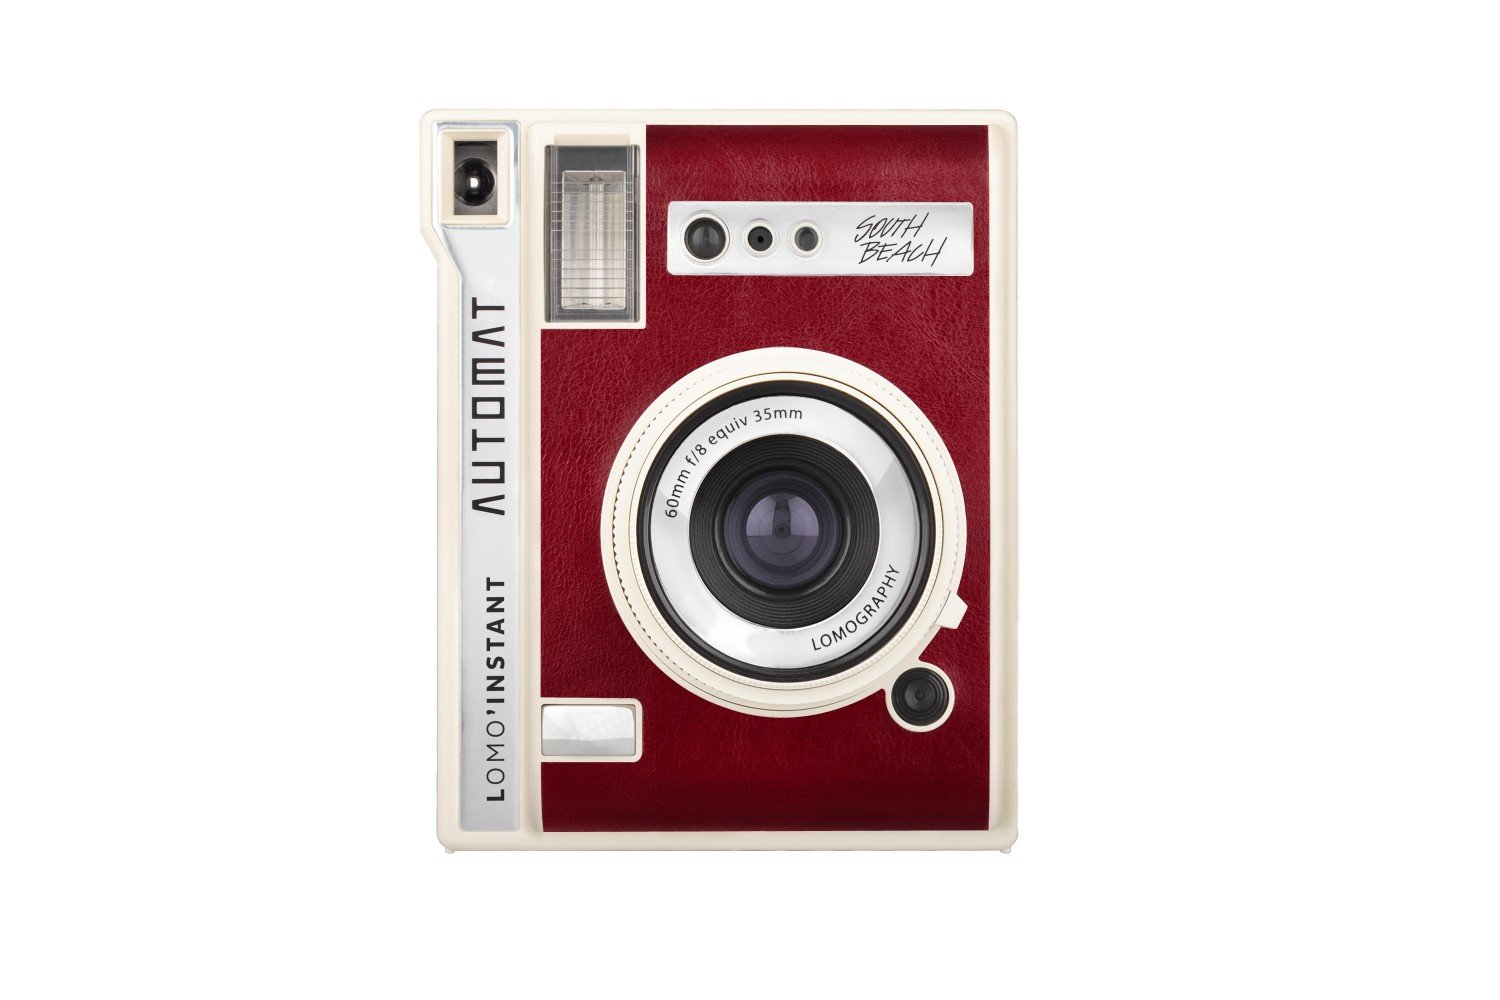 Lomography Lomo\'Instant Automat South Beach - Instant Film Camera compatible for Fujifilm Instax Mini Film